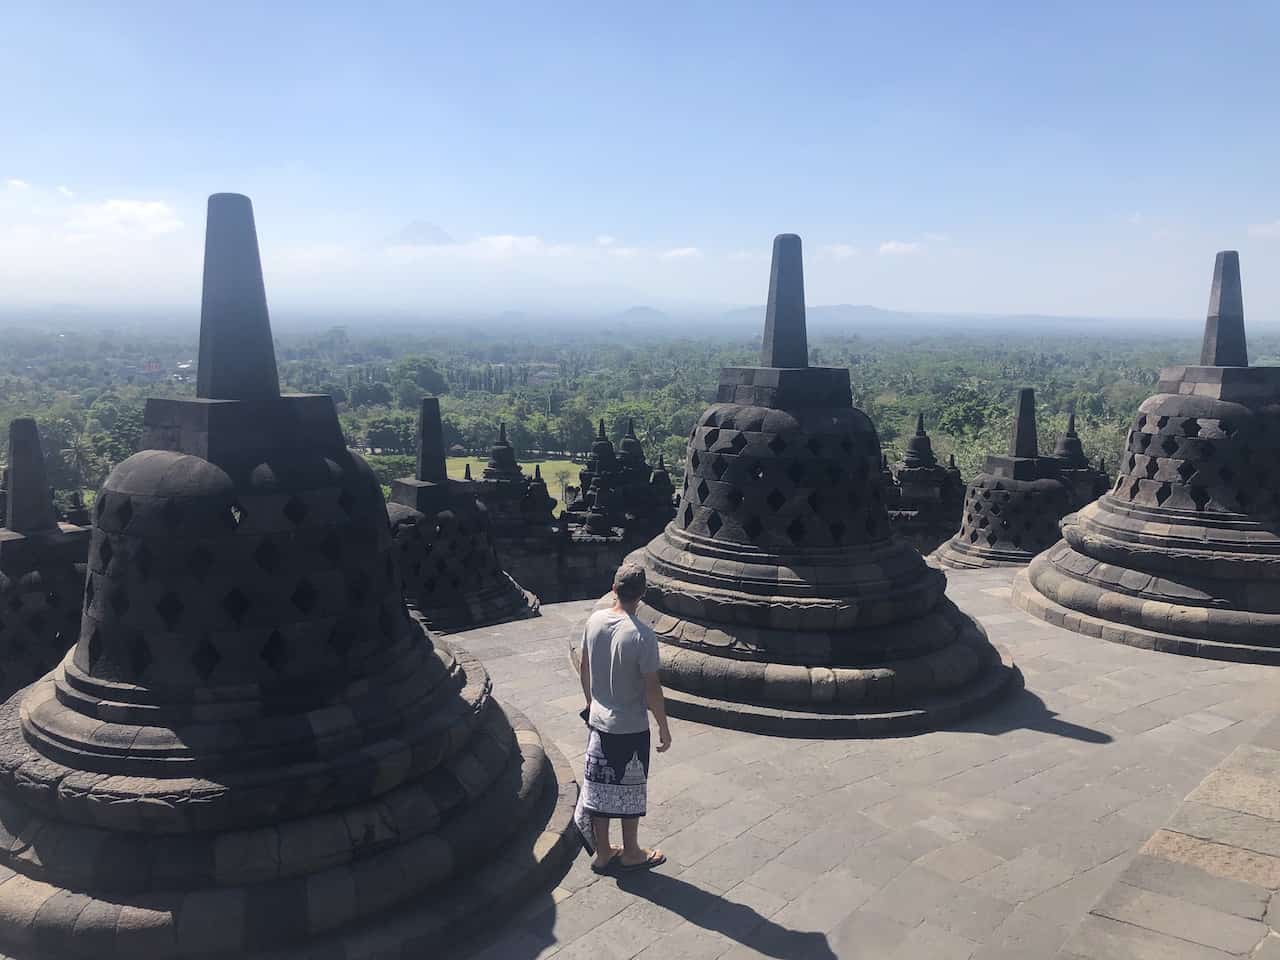 Borobudur Stupas